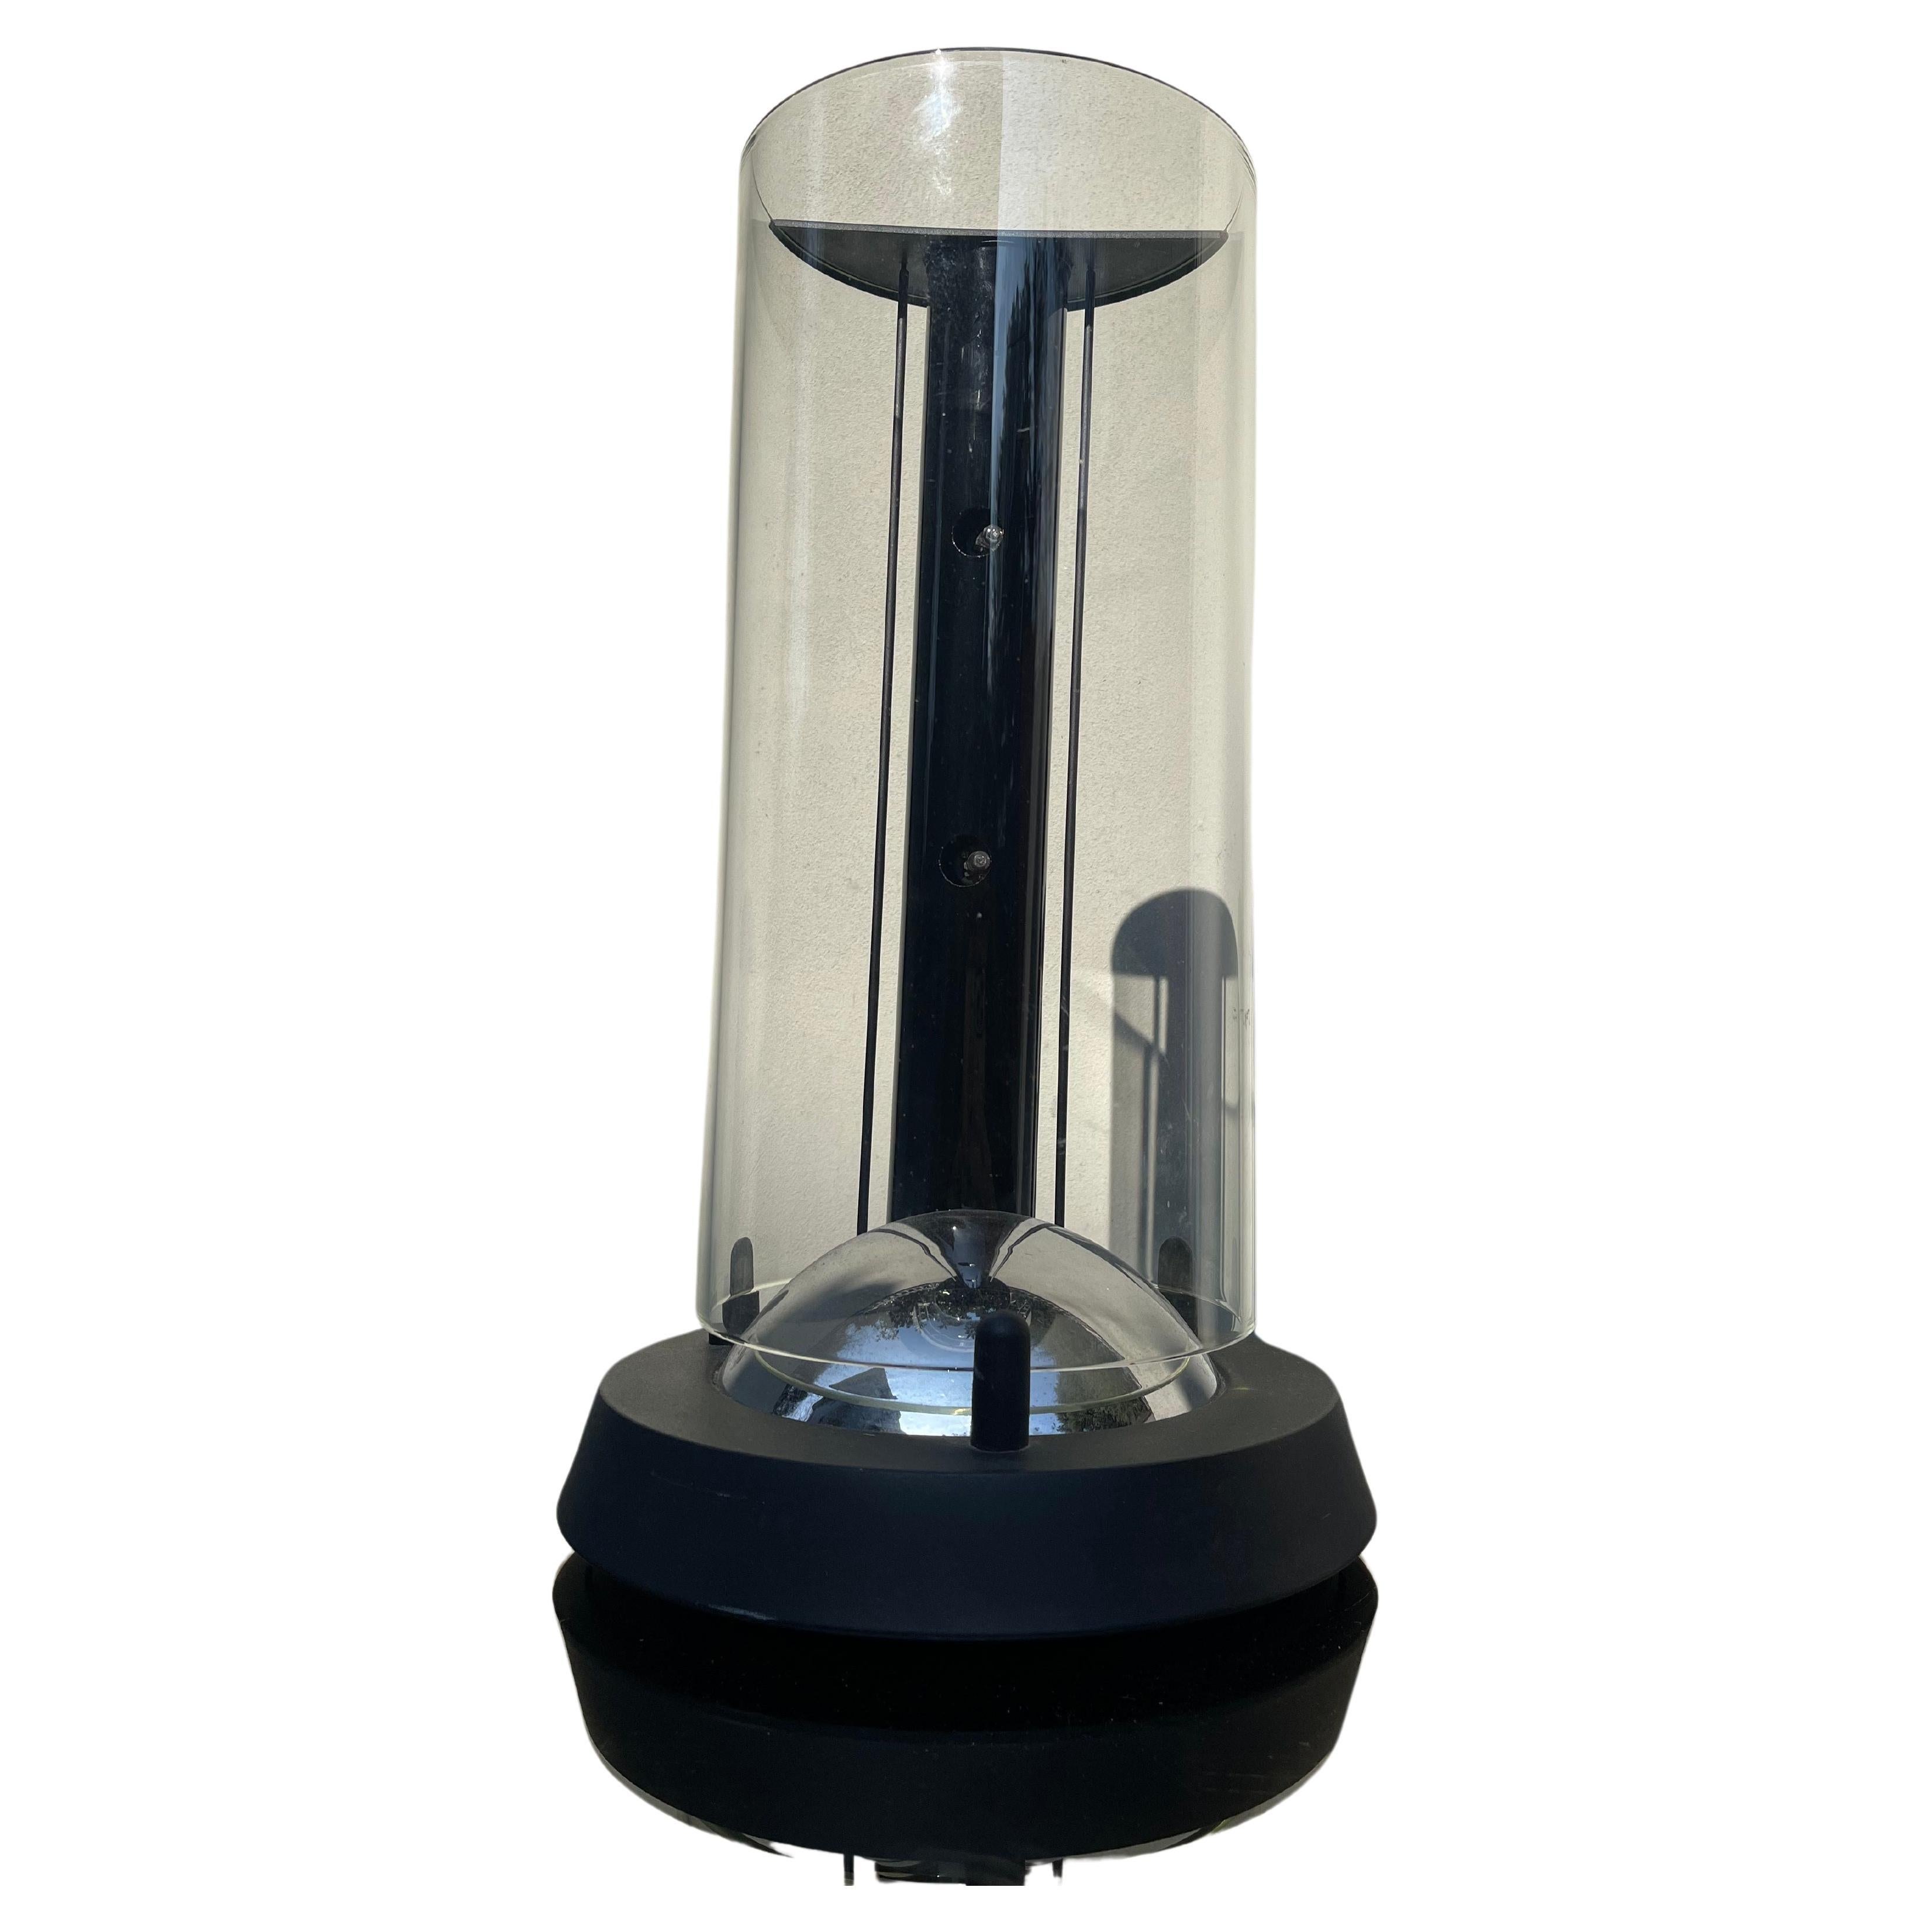 ans lampada design Anni 70 - vetro trasparente - luci alogen - Design - Lampe